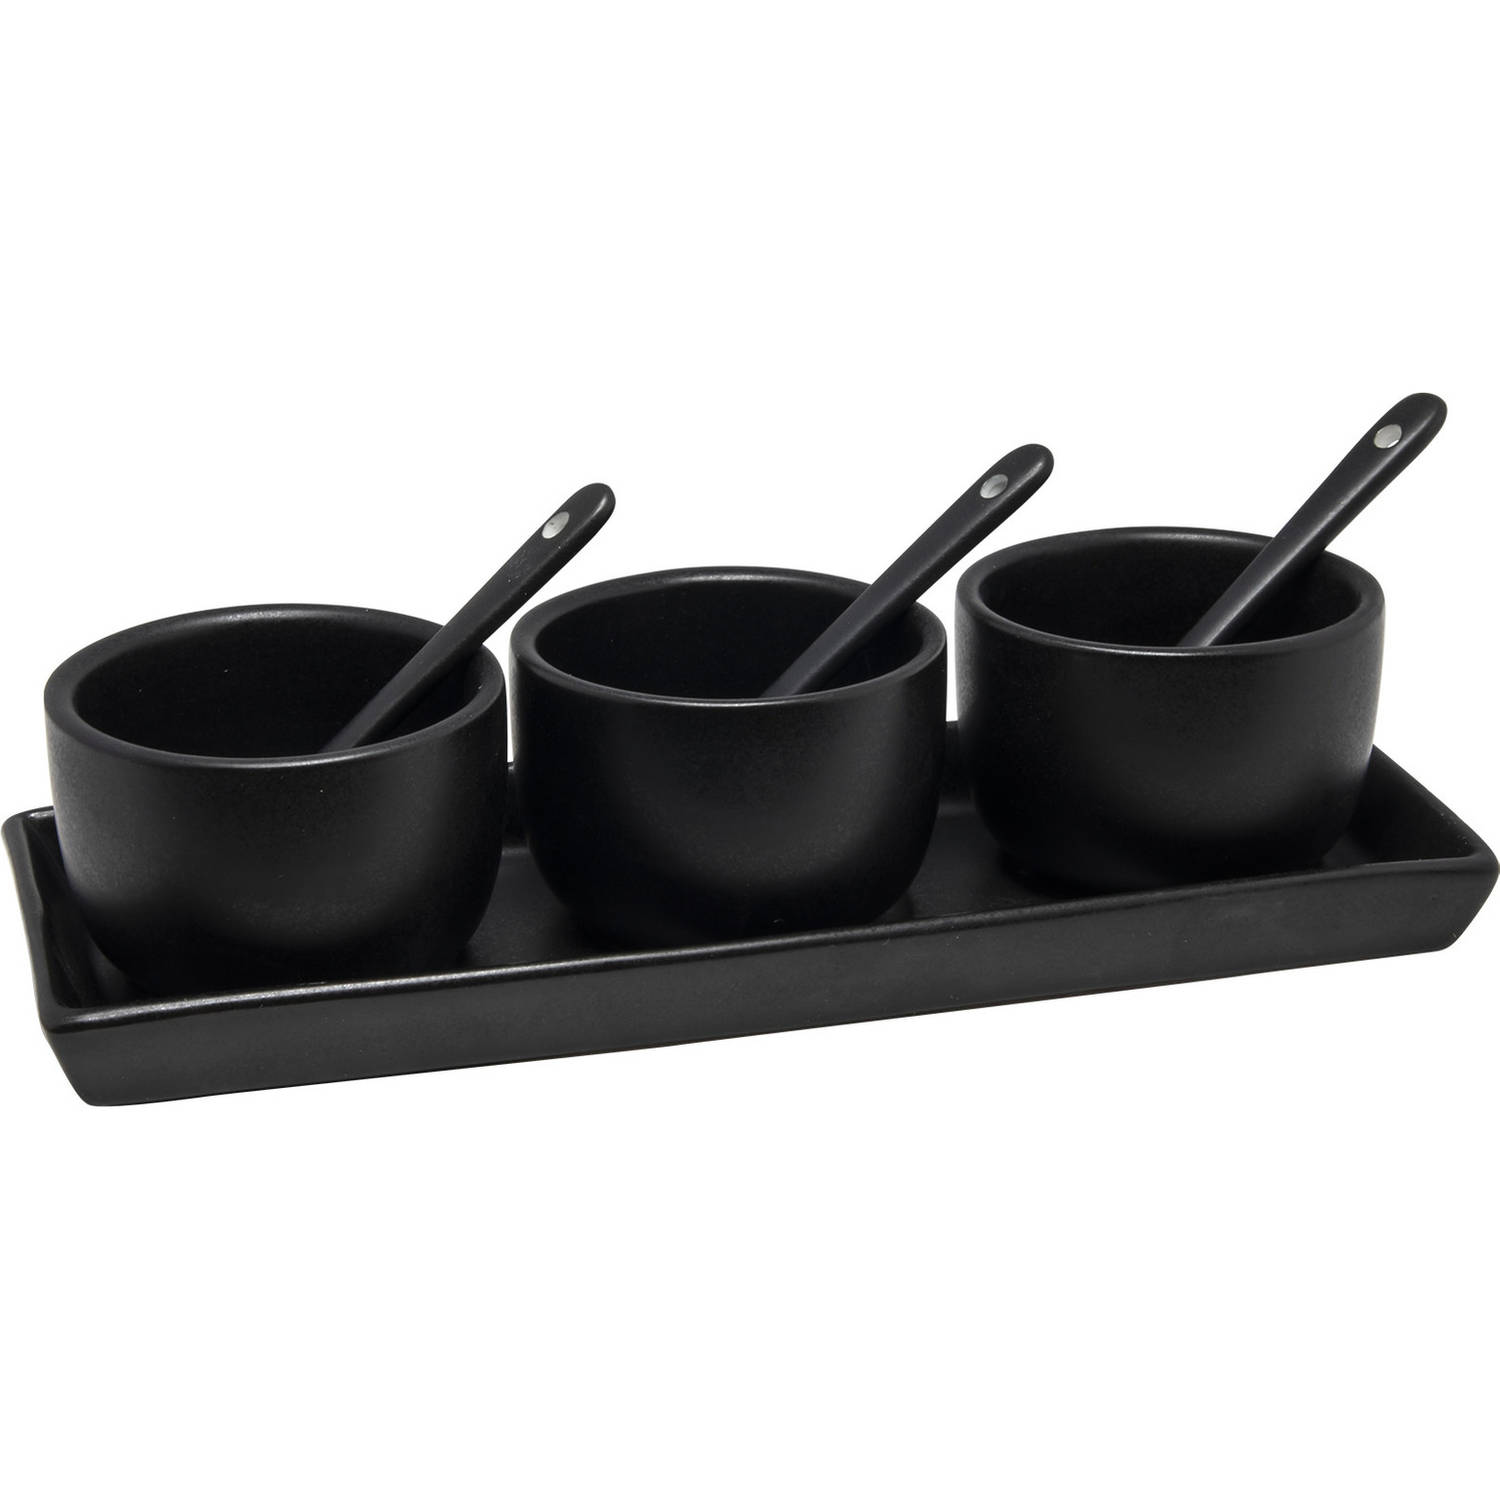 Zwarte sausbakjes serveerschalen set 7-delig - Serveerschalen